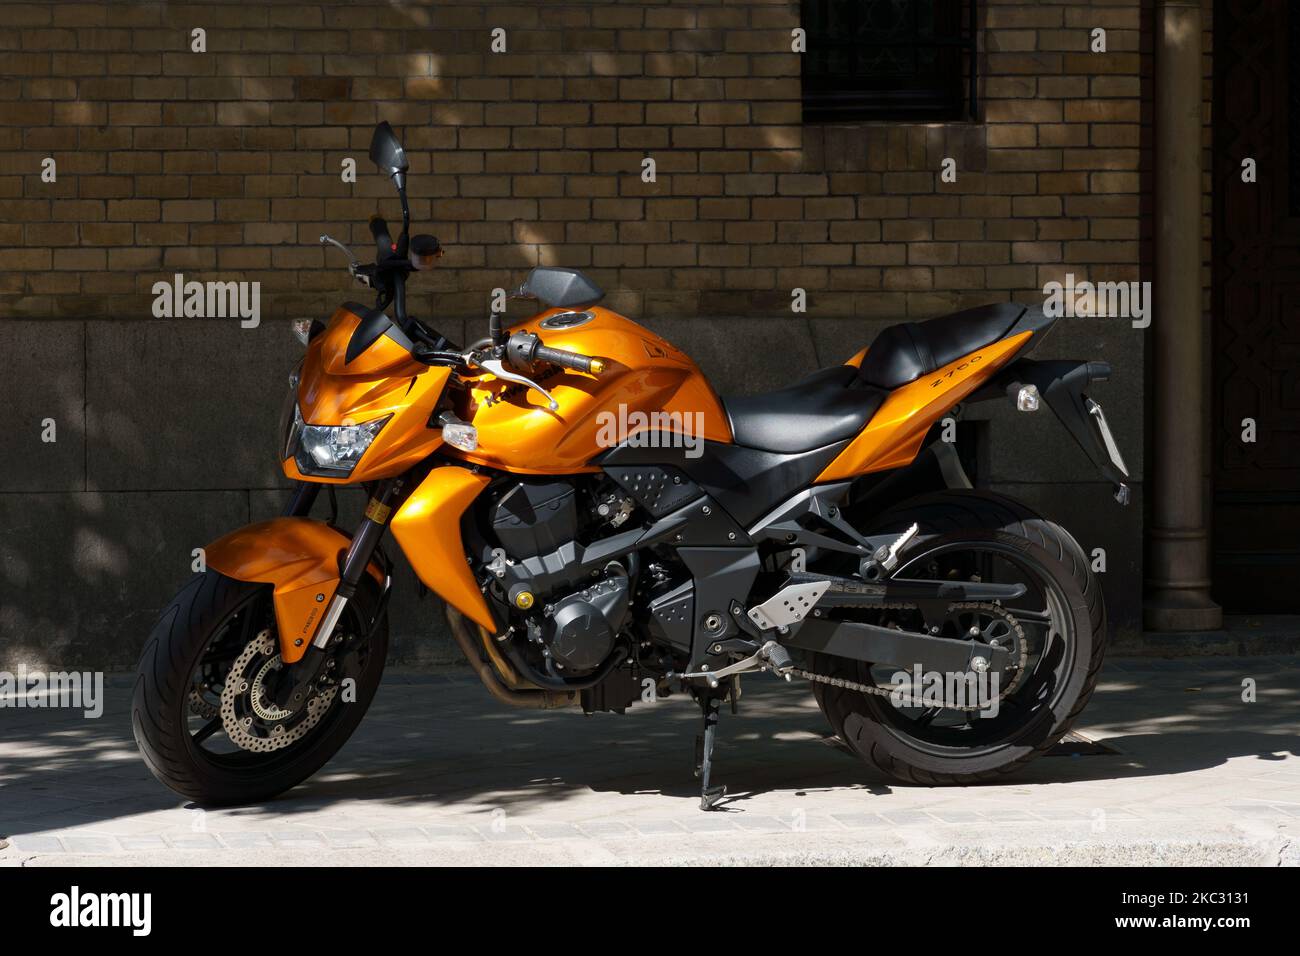 Madrid, Spain - September 24, 2022: Parked orange motorcycle of Kawasaki Z750 Stock Photo